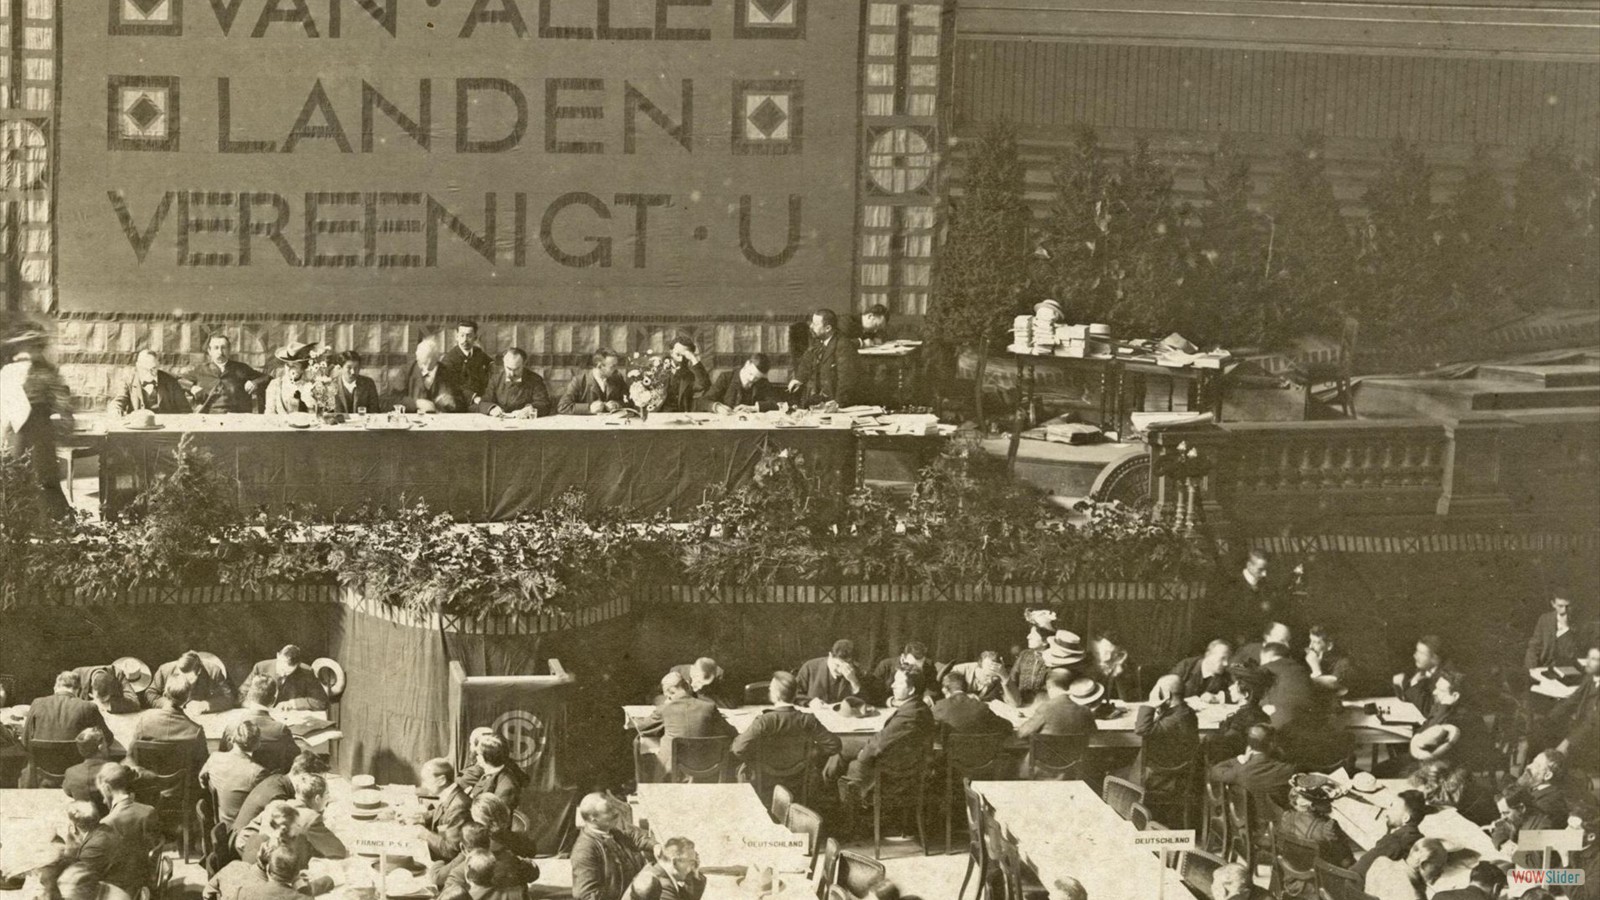 1904 Socialist International Congress in Amsterdam